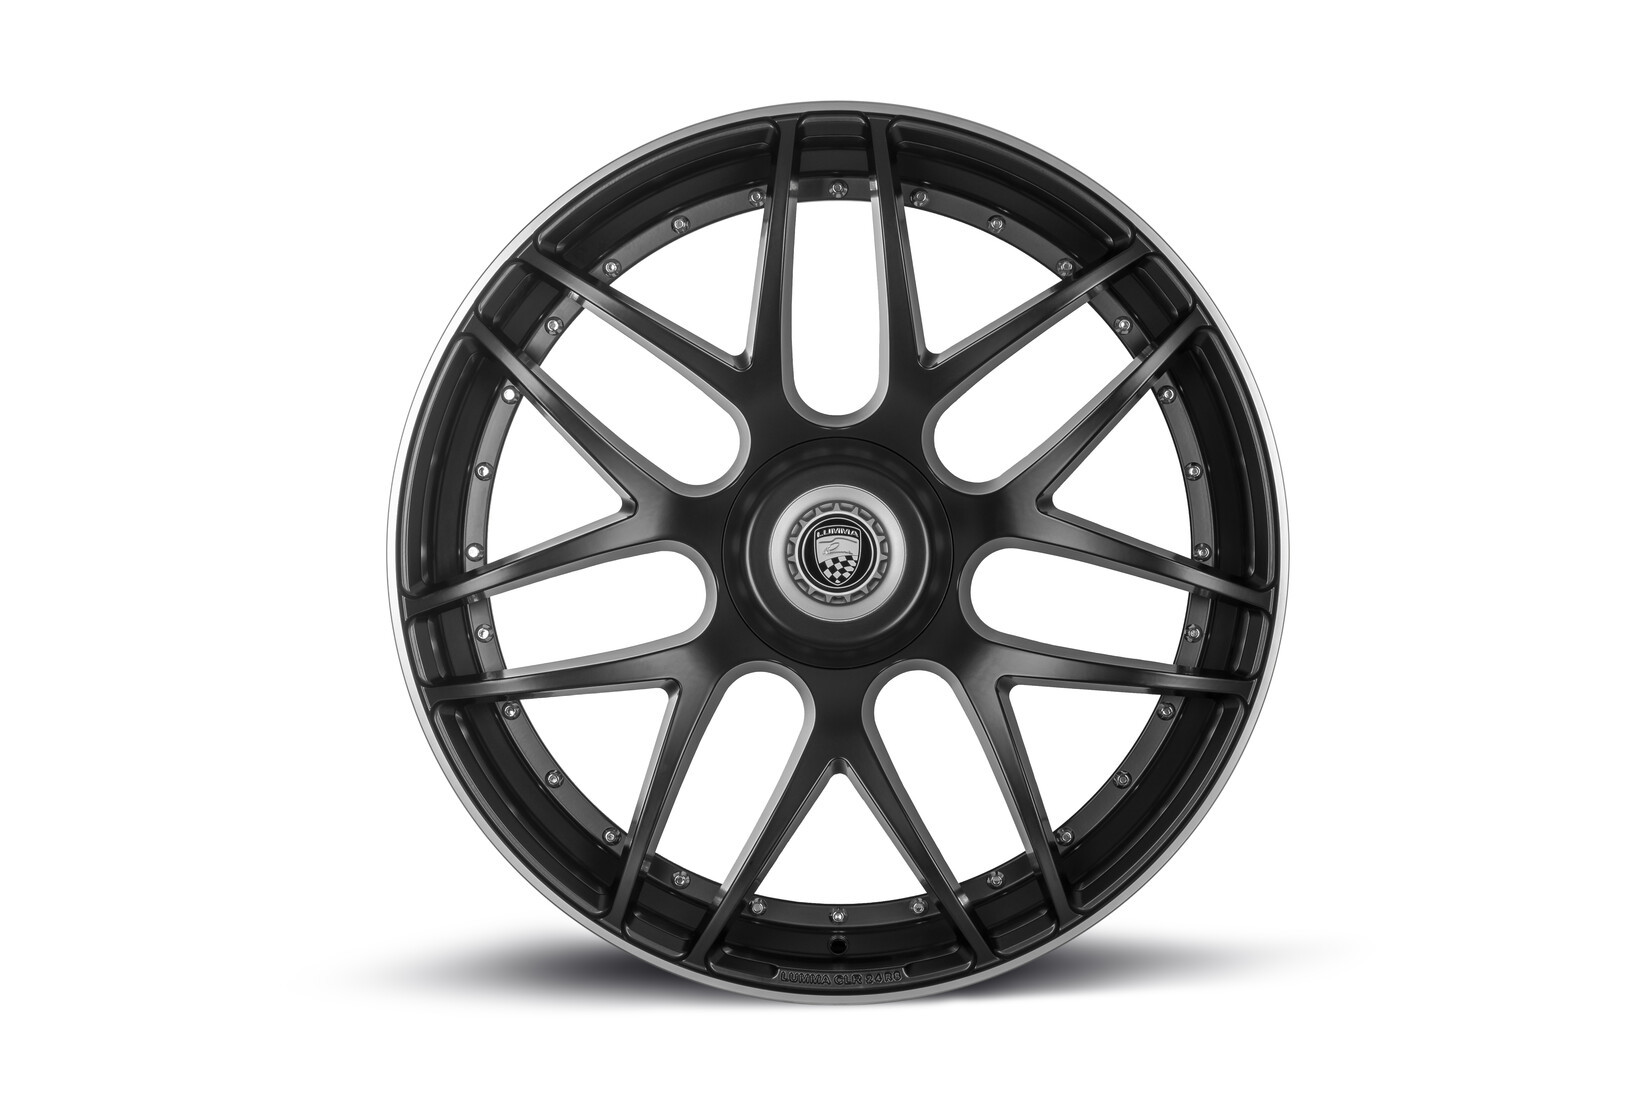 LUMMA CLR 24 RS 2019 Forged Wheels